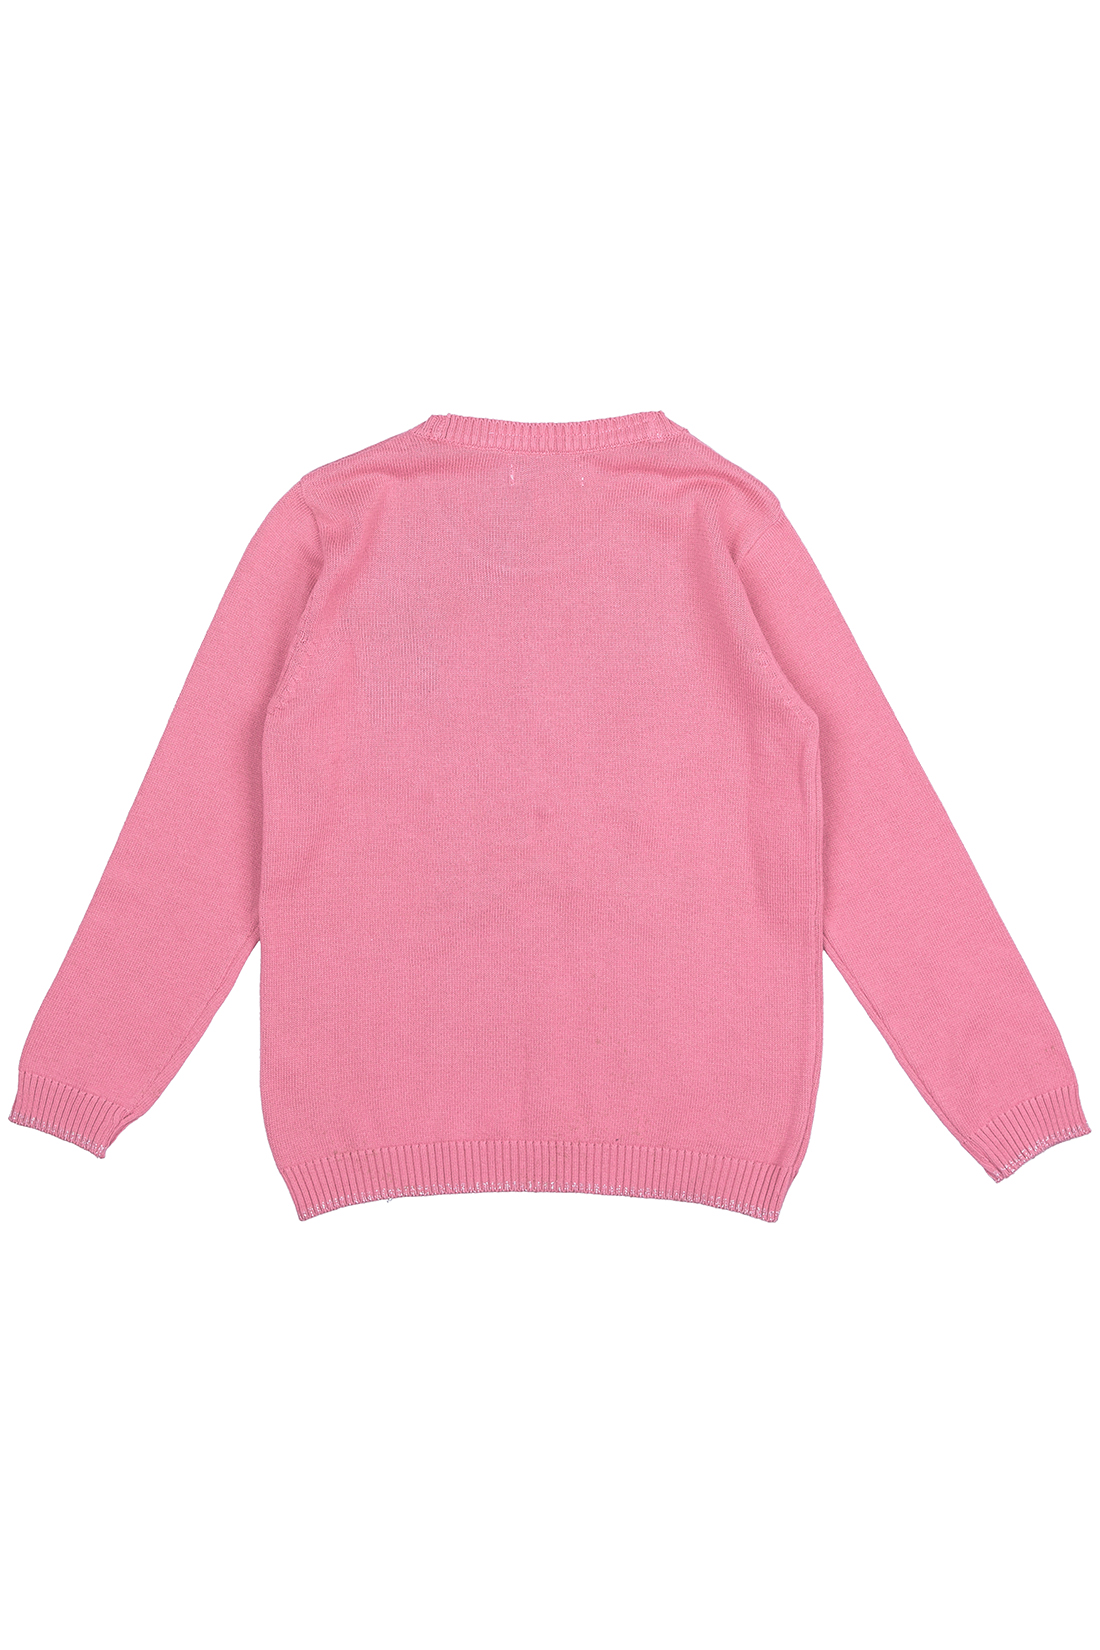 Джемпер для девочки (арт. baon BK138505), размер 122-128, цвет розовый Джемпер для девочки (арт. baon BK138505) - фото 2